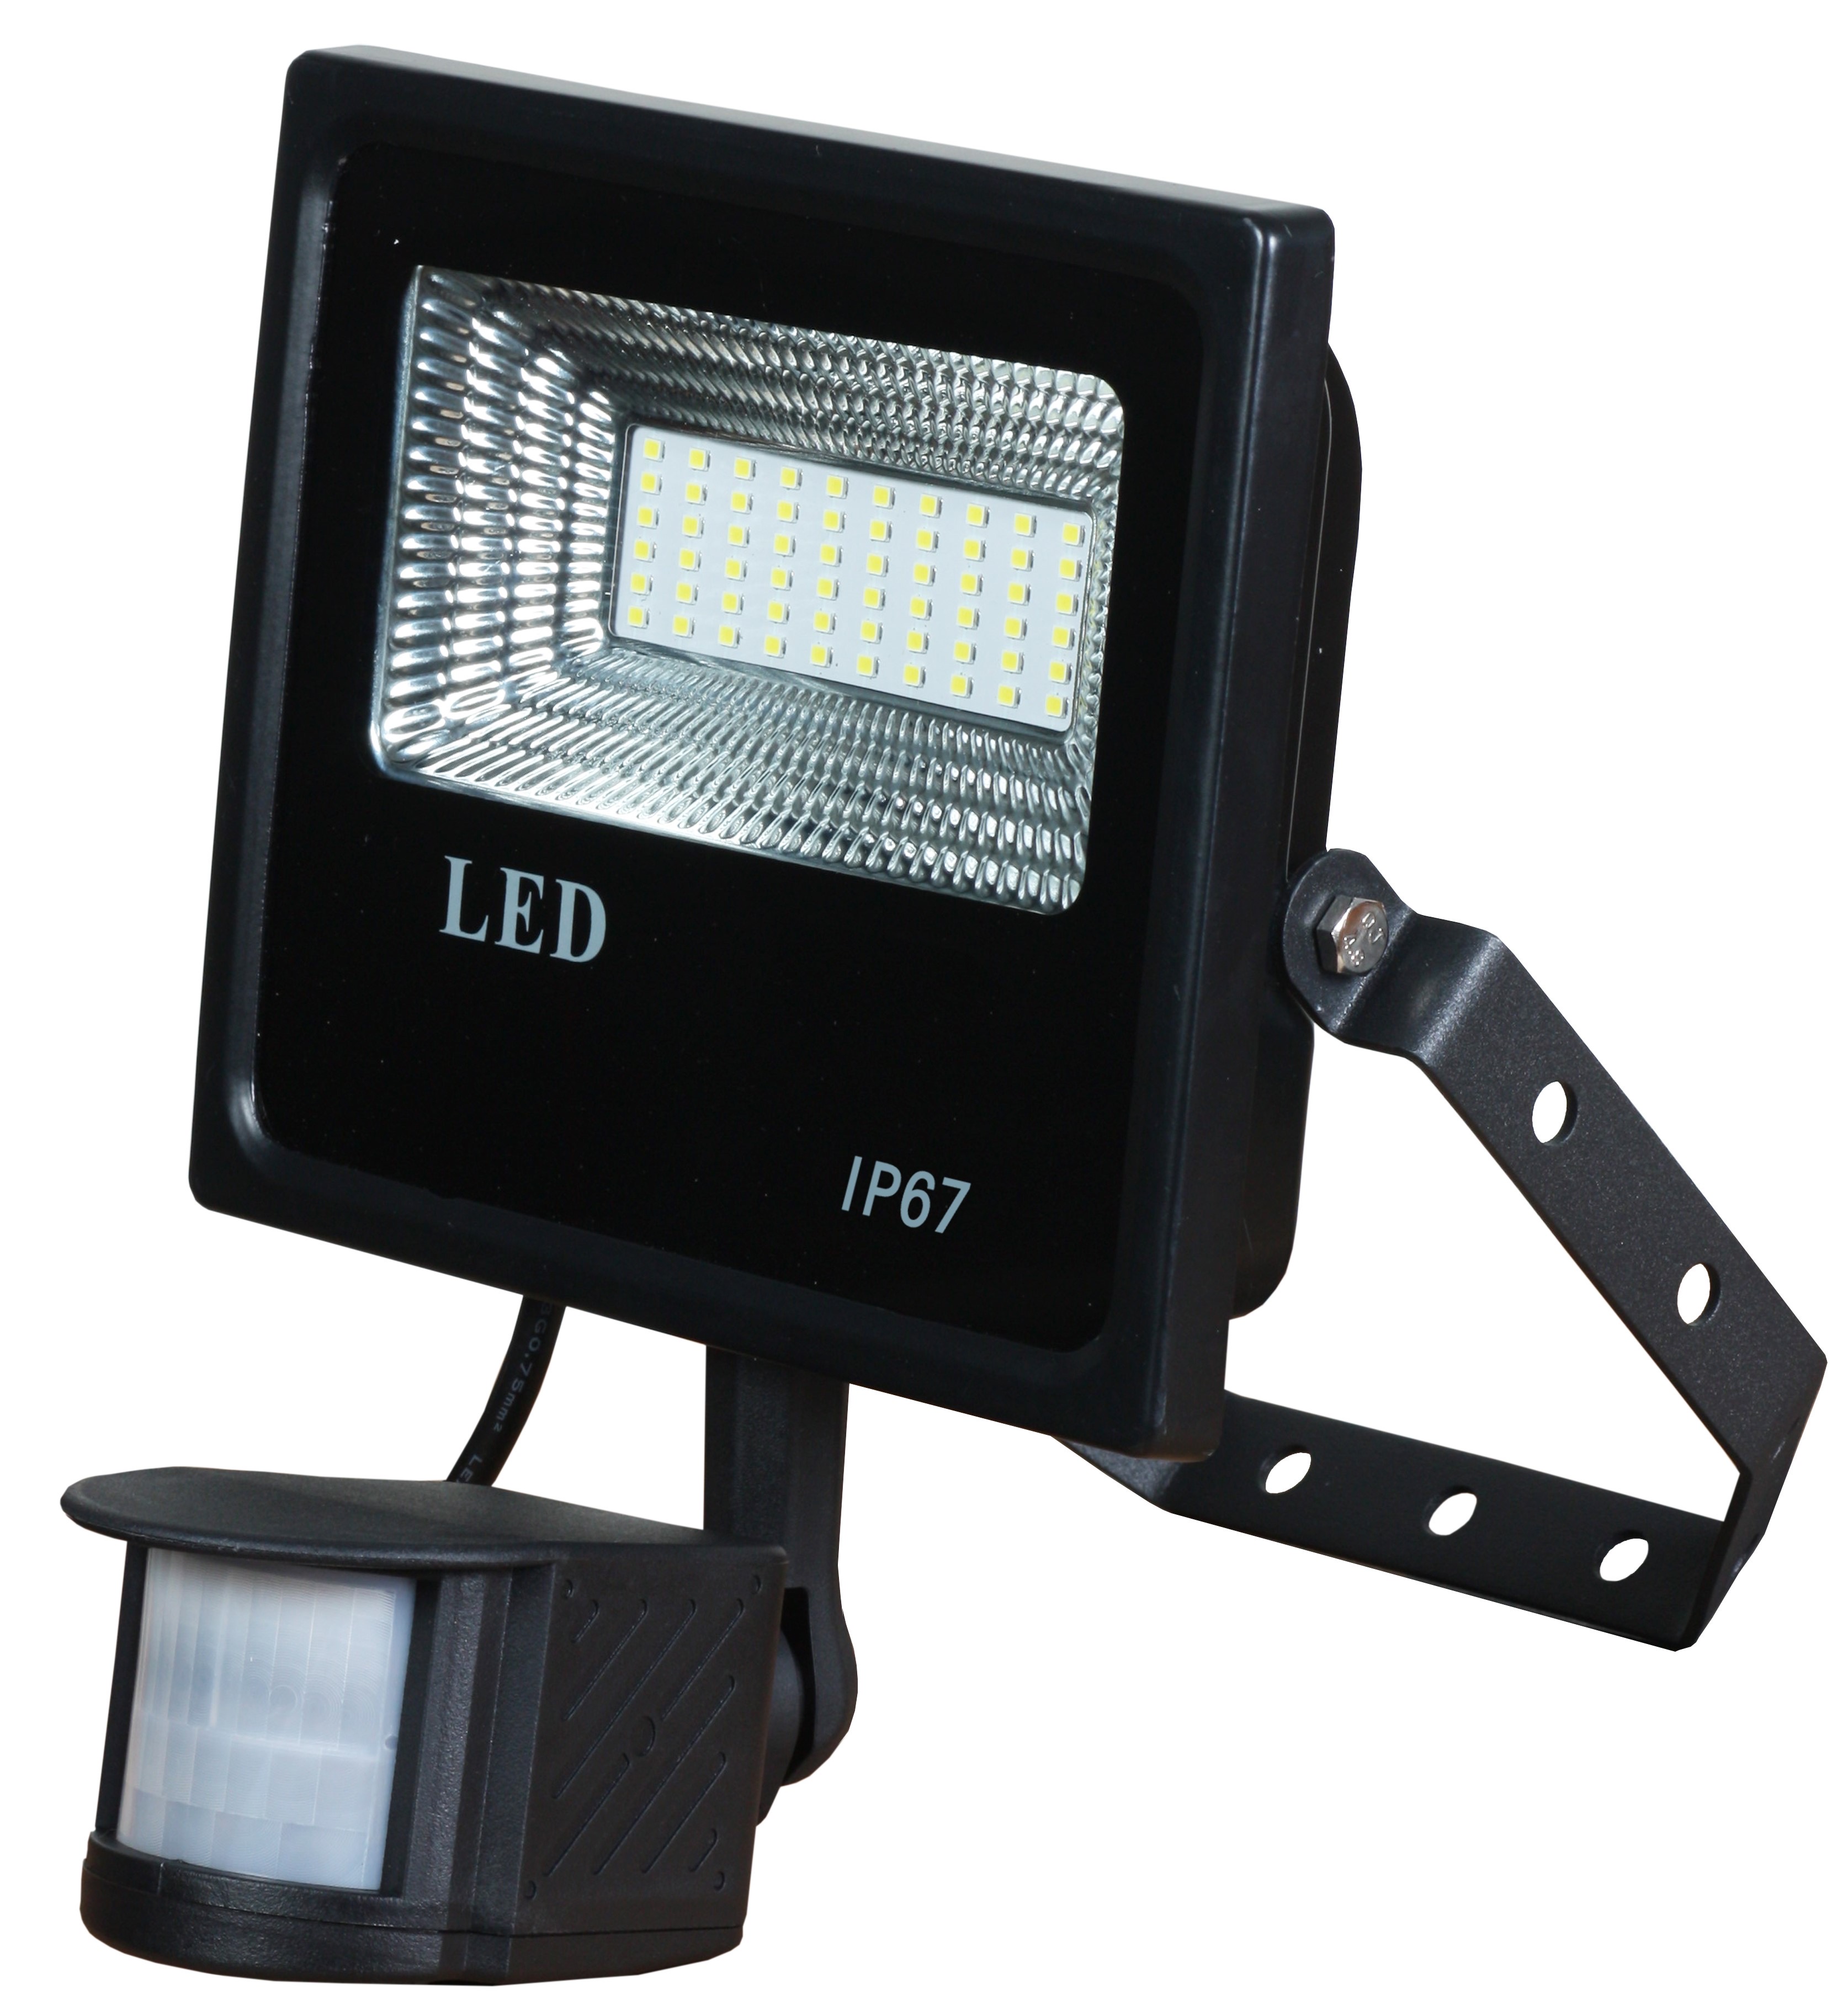 LED自動感應燈